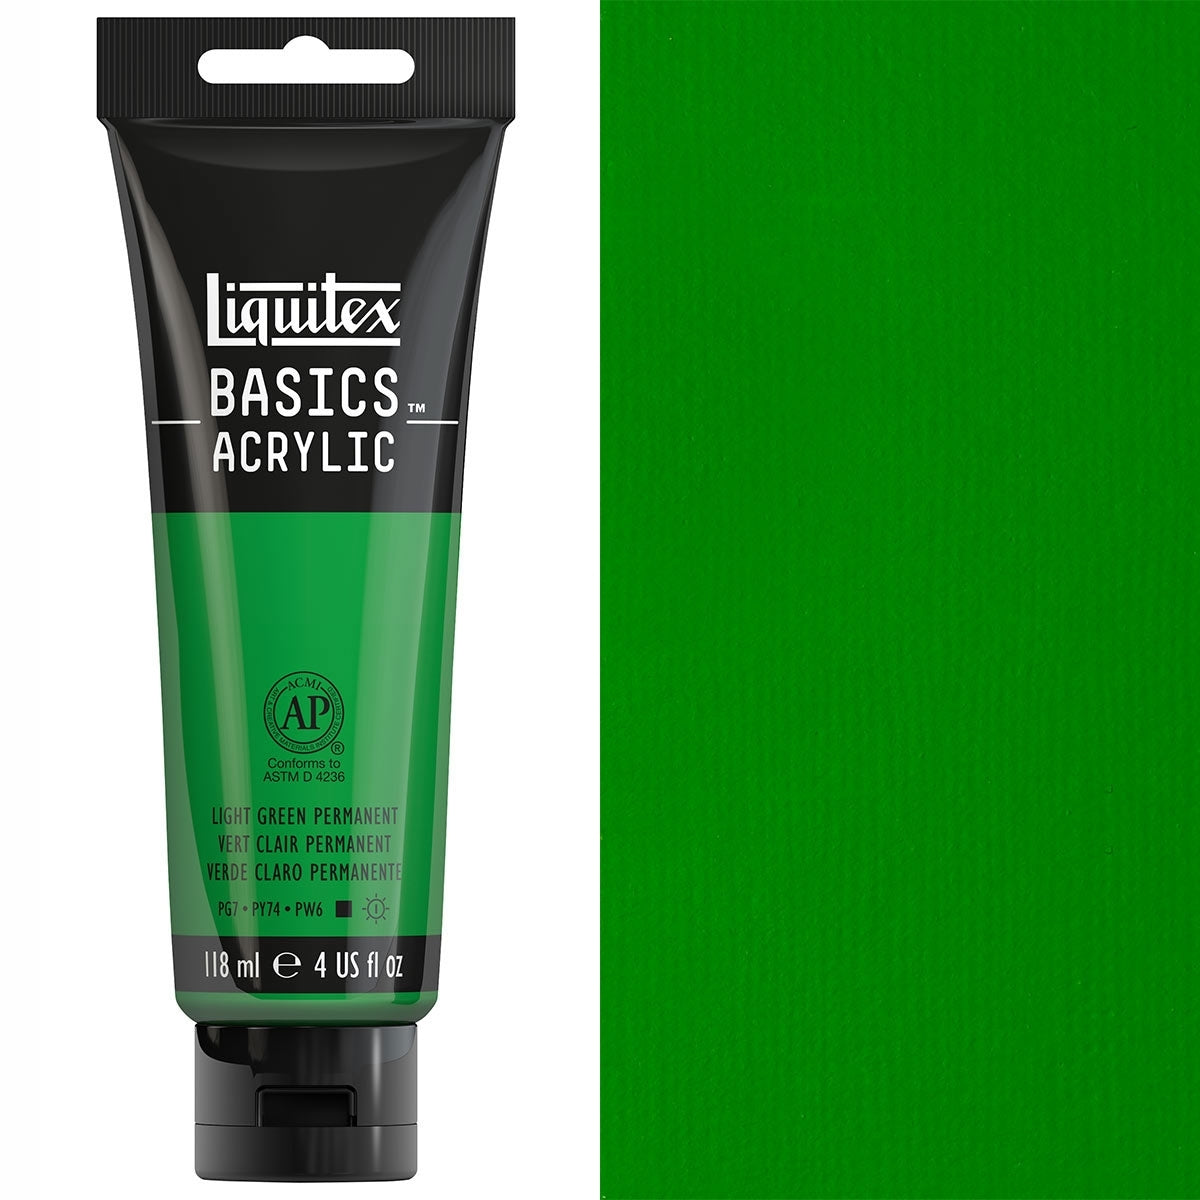 Liquitex - Basics Acrylic Colour - 118ml Light Green Permanent